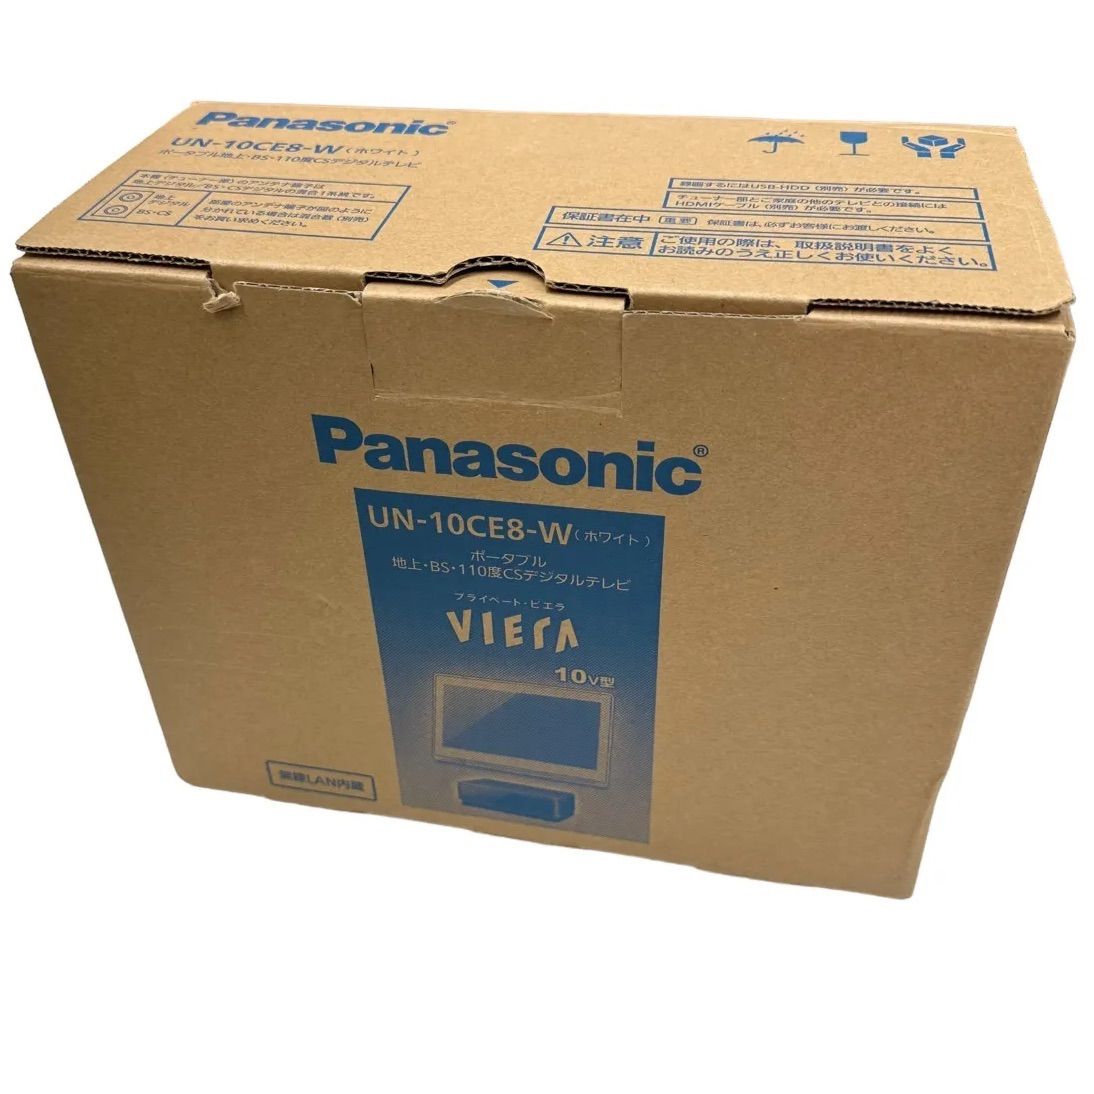 Panasonic プライベート・ビエラ UN-10CE8-W 新品•未使用品